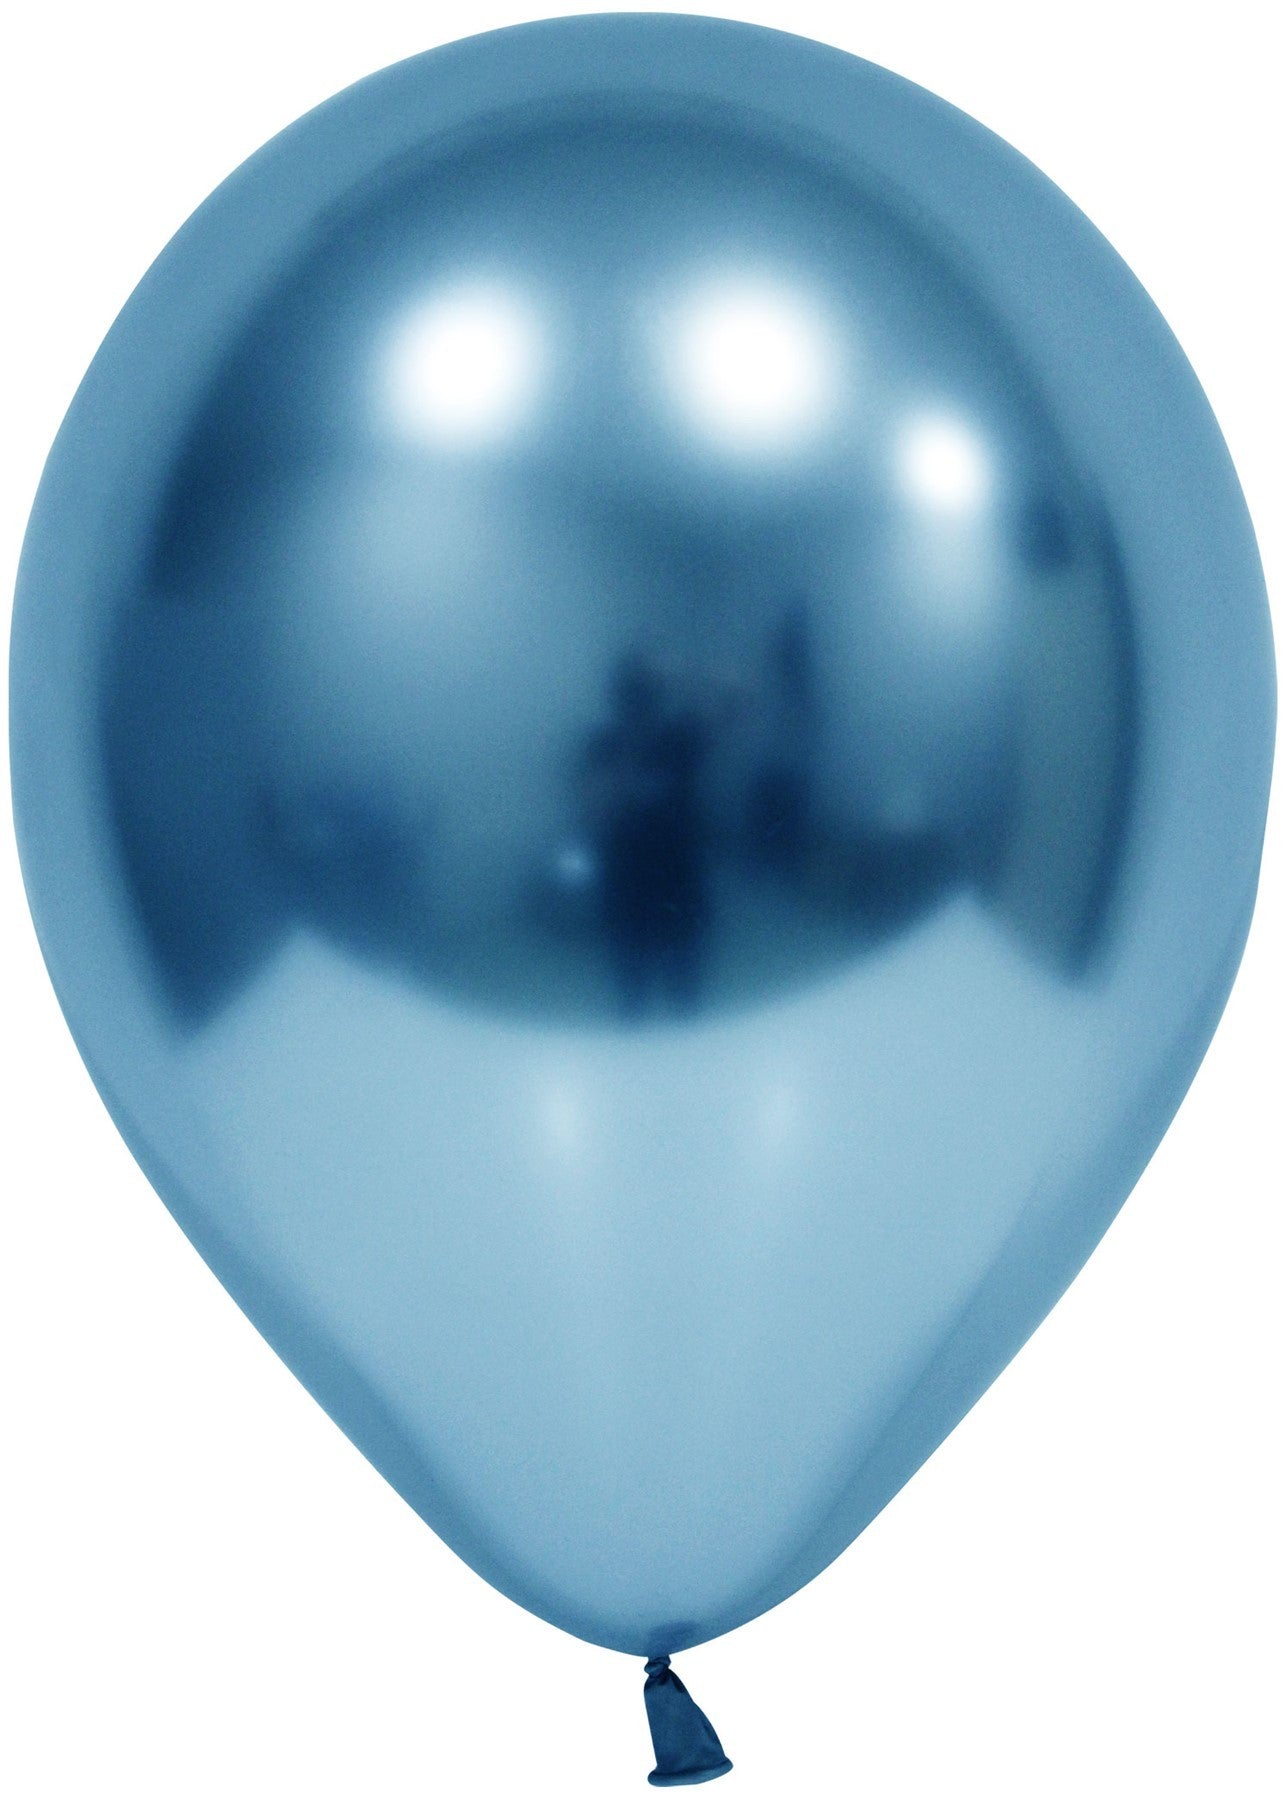 View Blue Chrome Latex Balloon 12 inch Pk 50 information